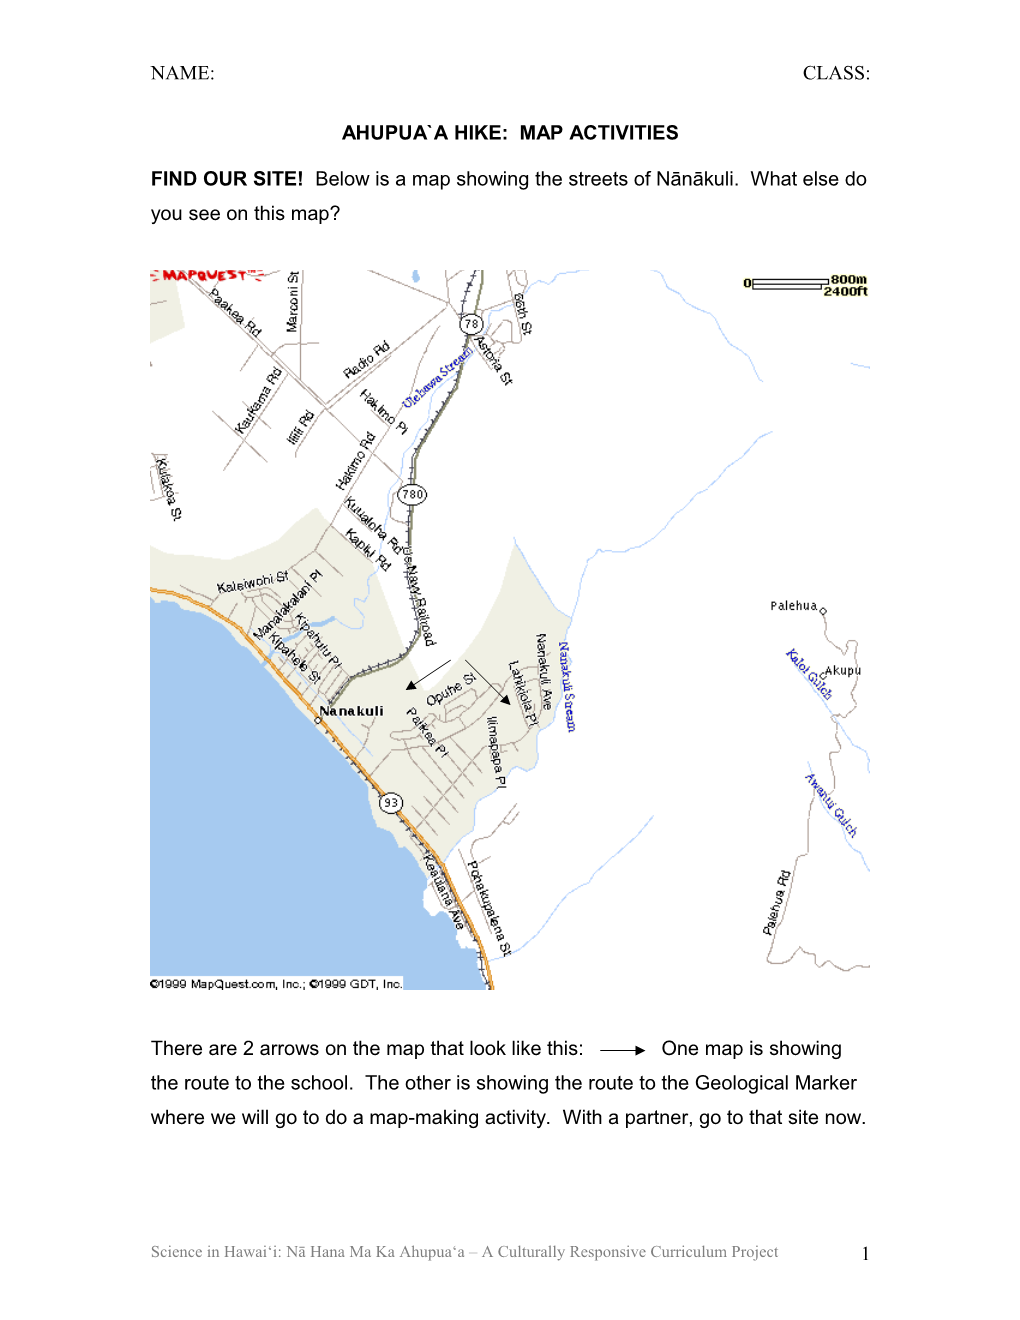 Ahupua a Hike: Map Activities